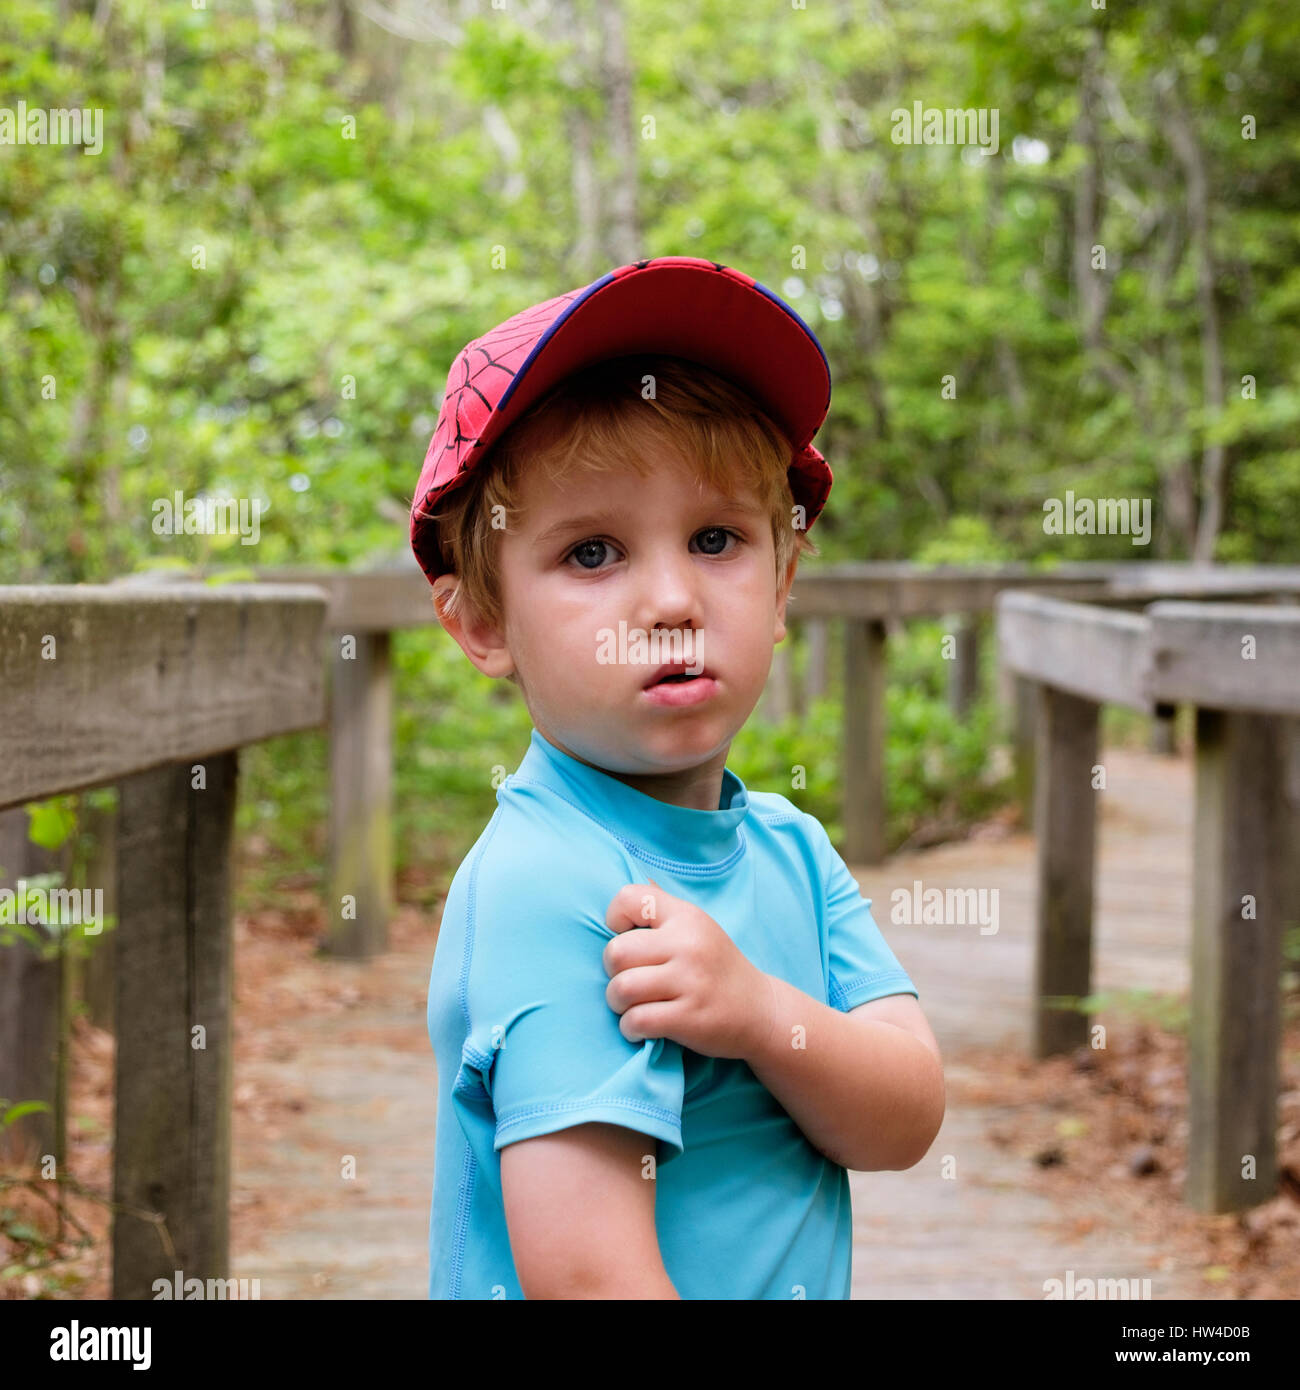 Caucasian boy scratching shoulder in park Stock Photo